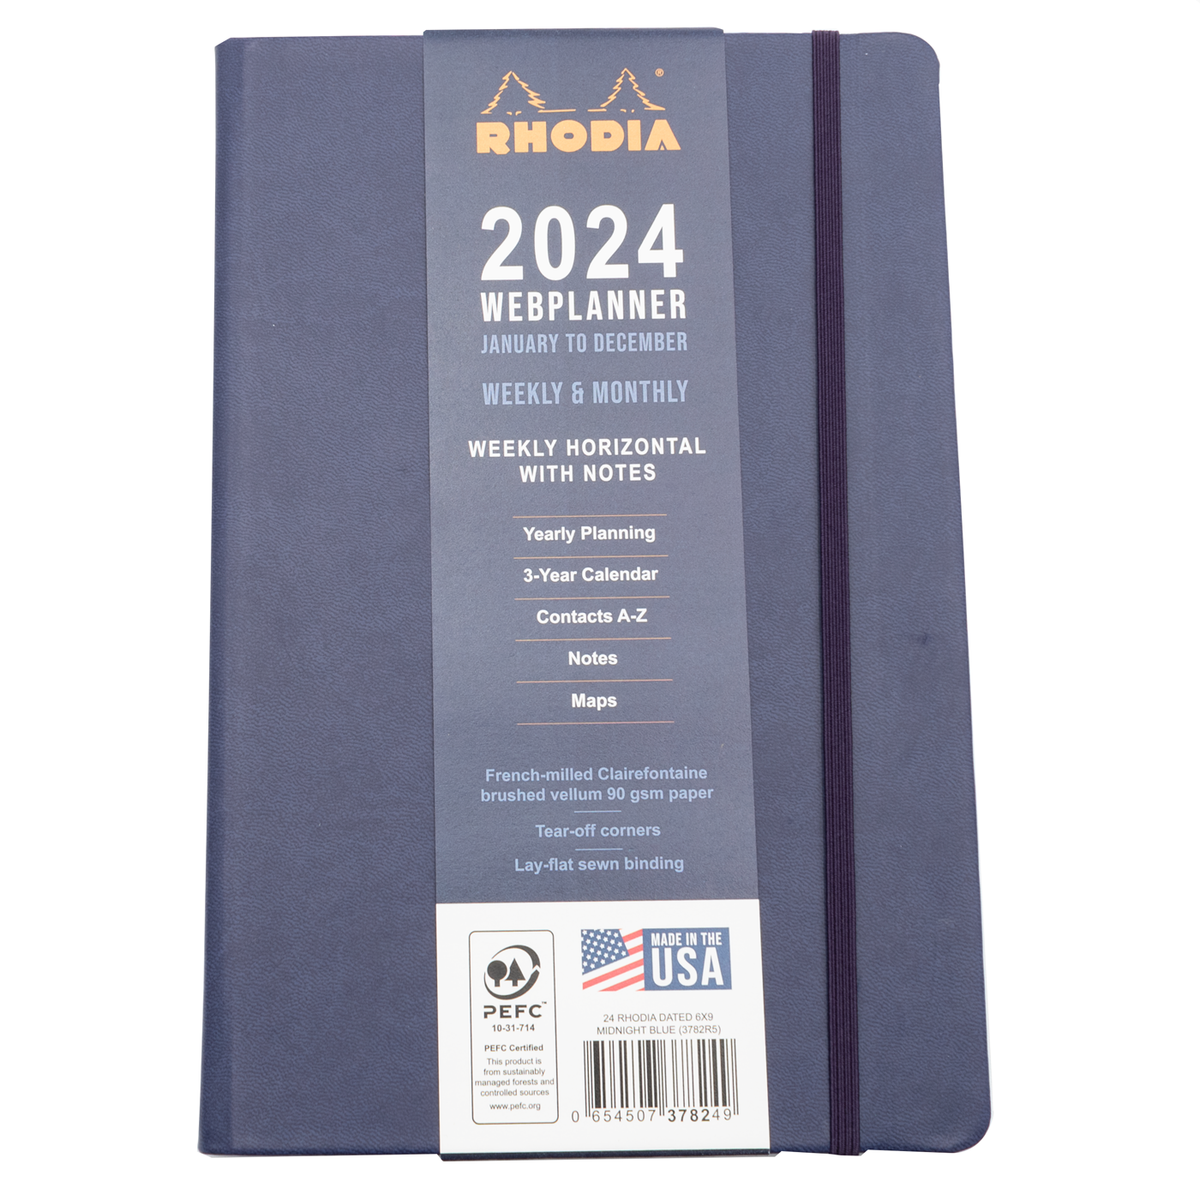 Rhodia 2024 WebPlanner Weekly Notebook 6 x 9"